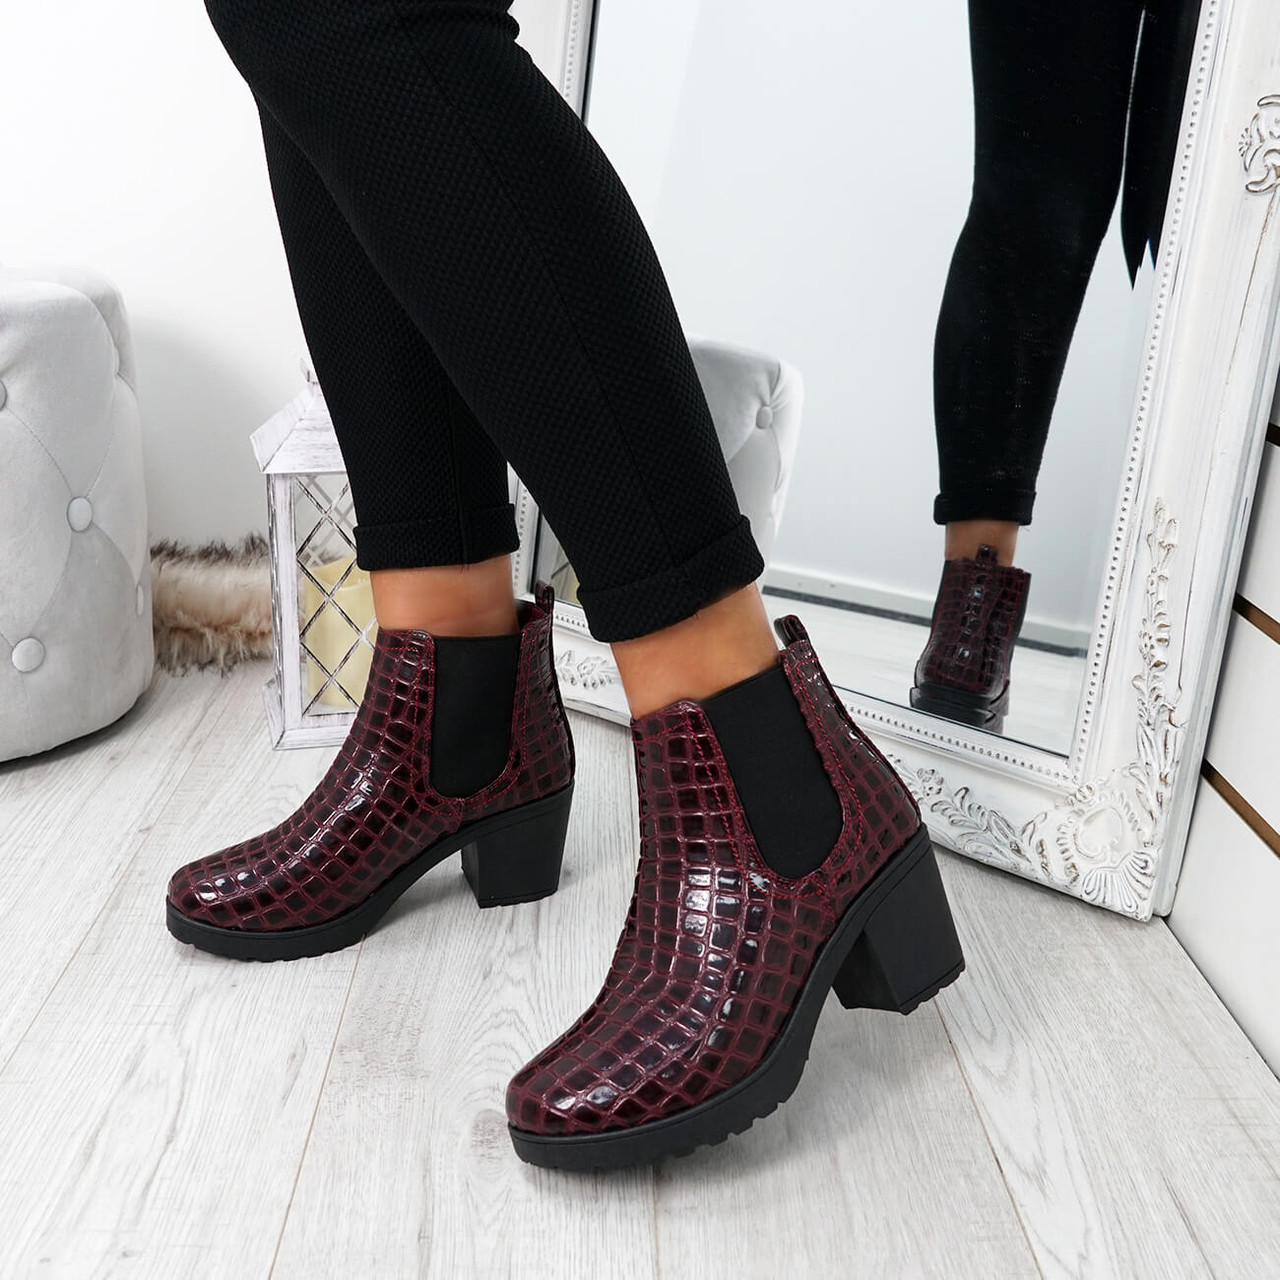 burgundy croc boots